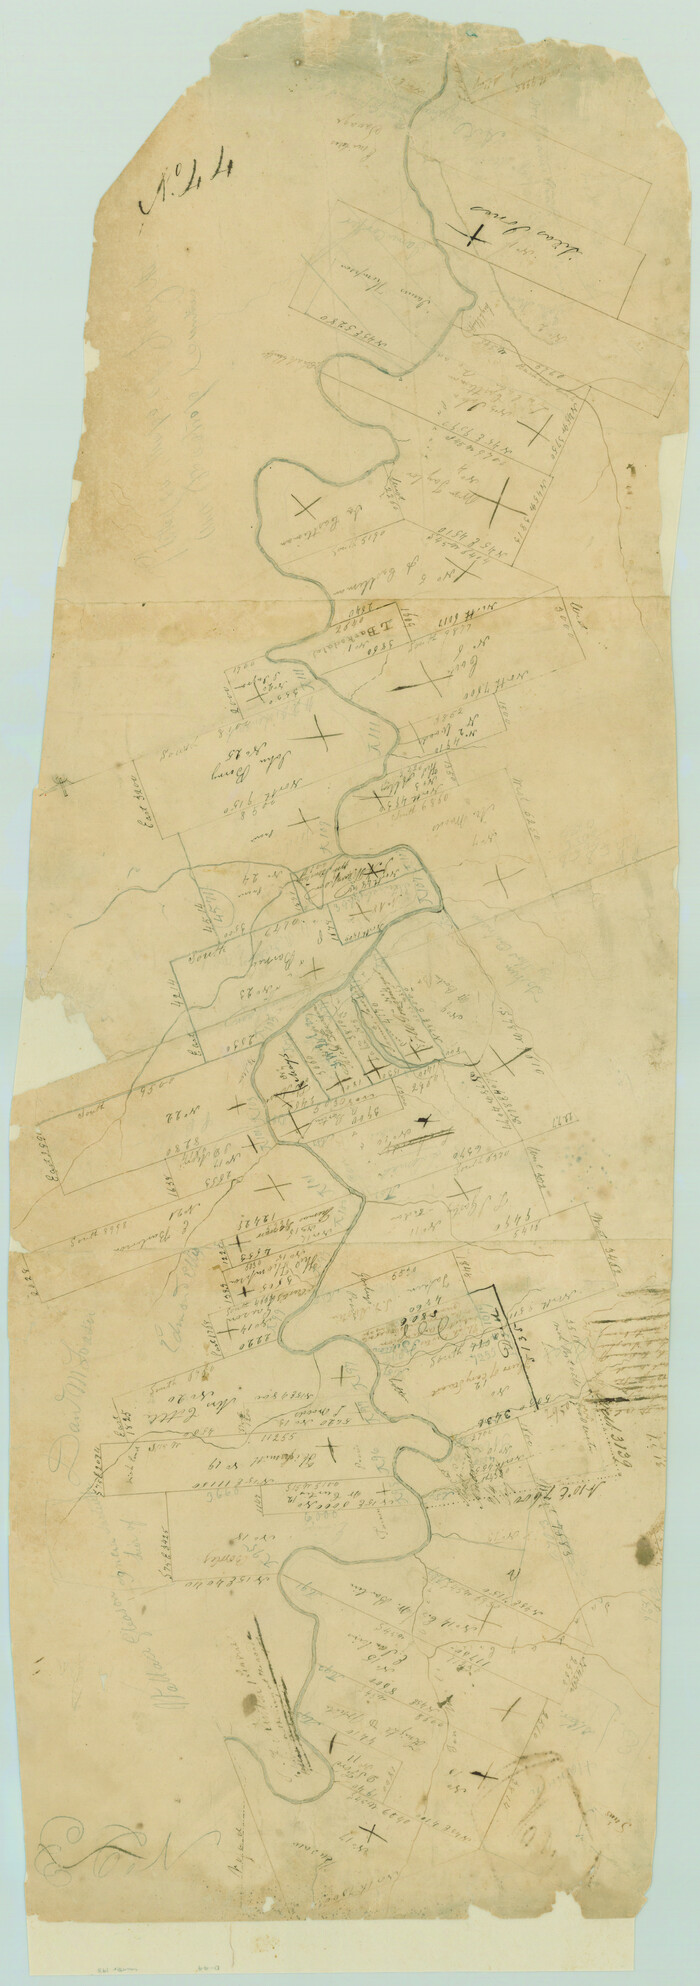 193, Surveys in Austin's Colony along the Colorado River below the San Antonio Road, General Map Collection